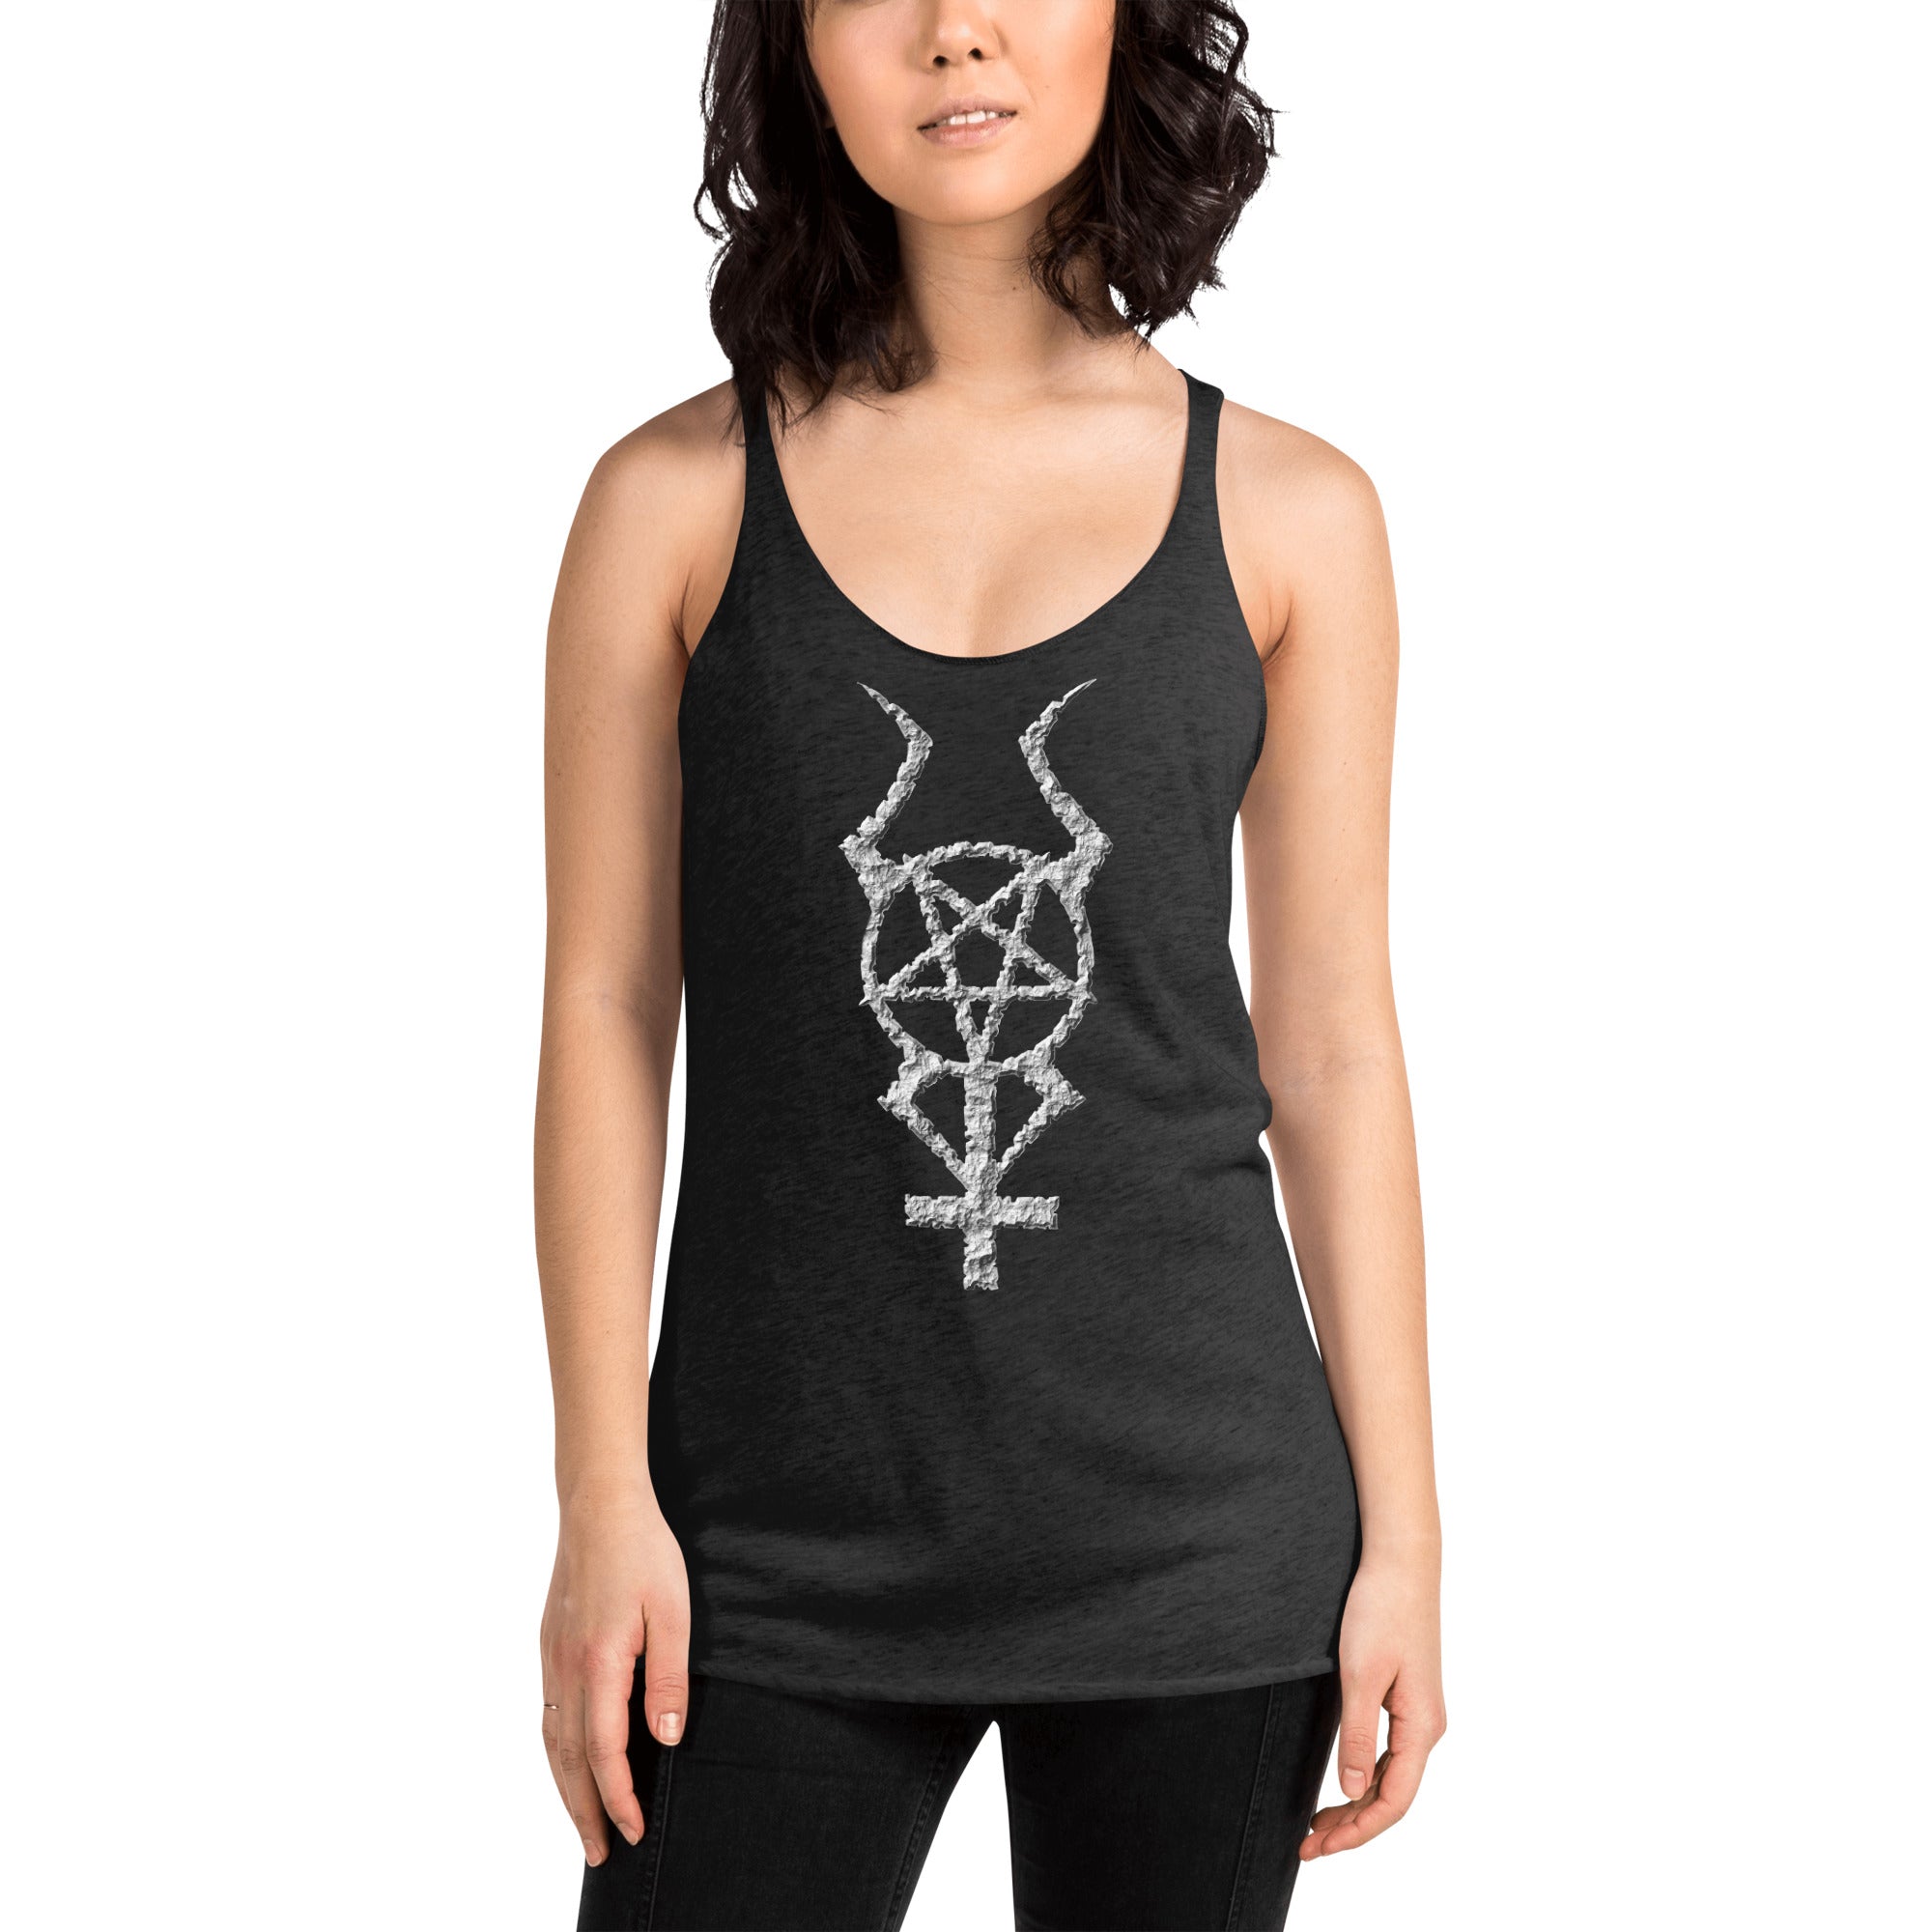 Ancient Stone Horned Pentacross Pentagram Cross Women's Racerback Tank Top Shirt - Edge of Life Designs